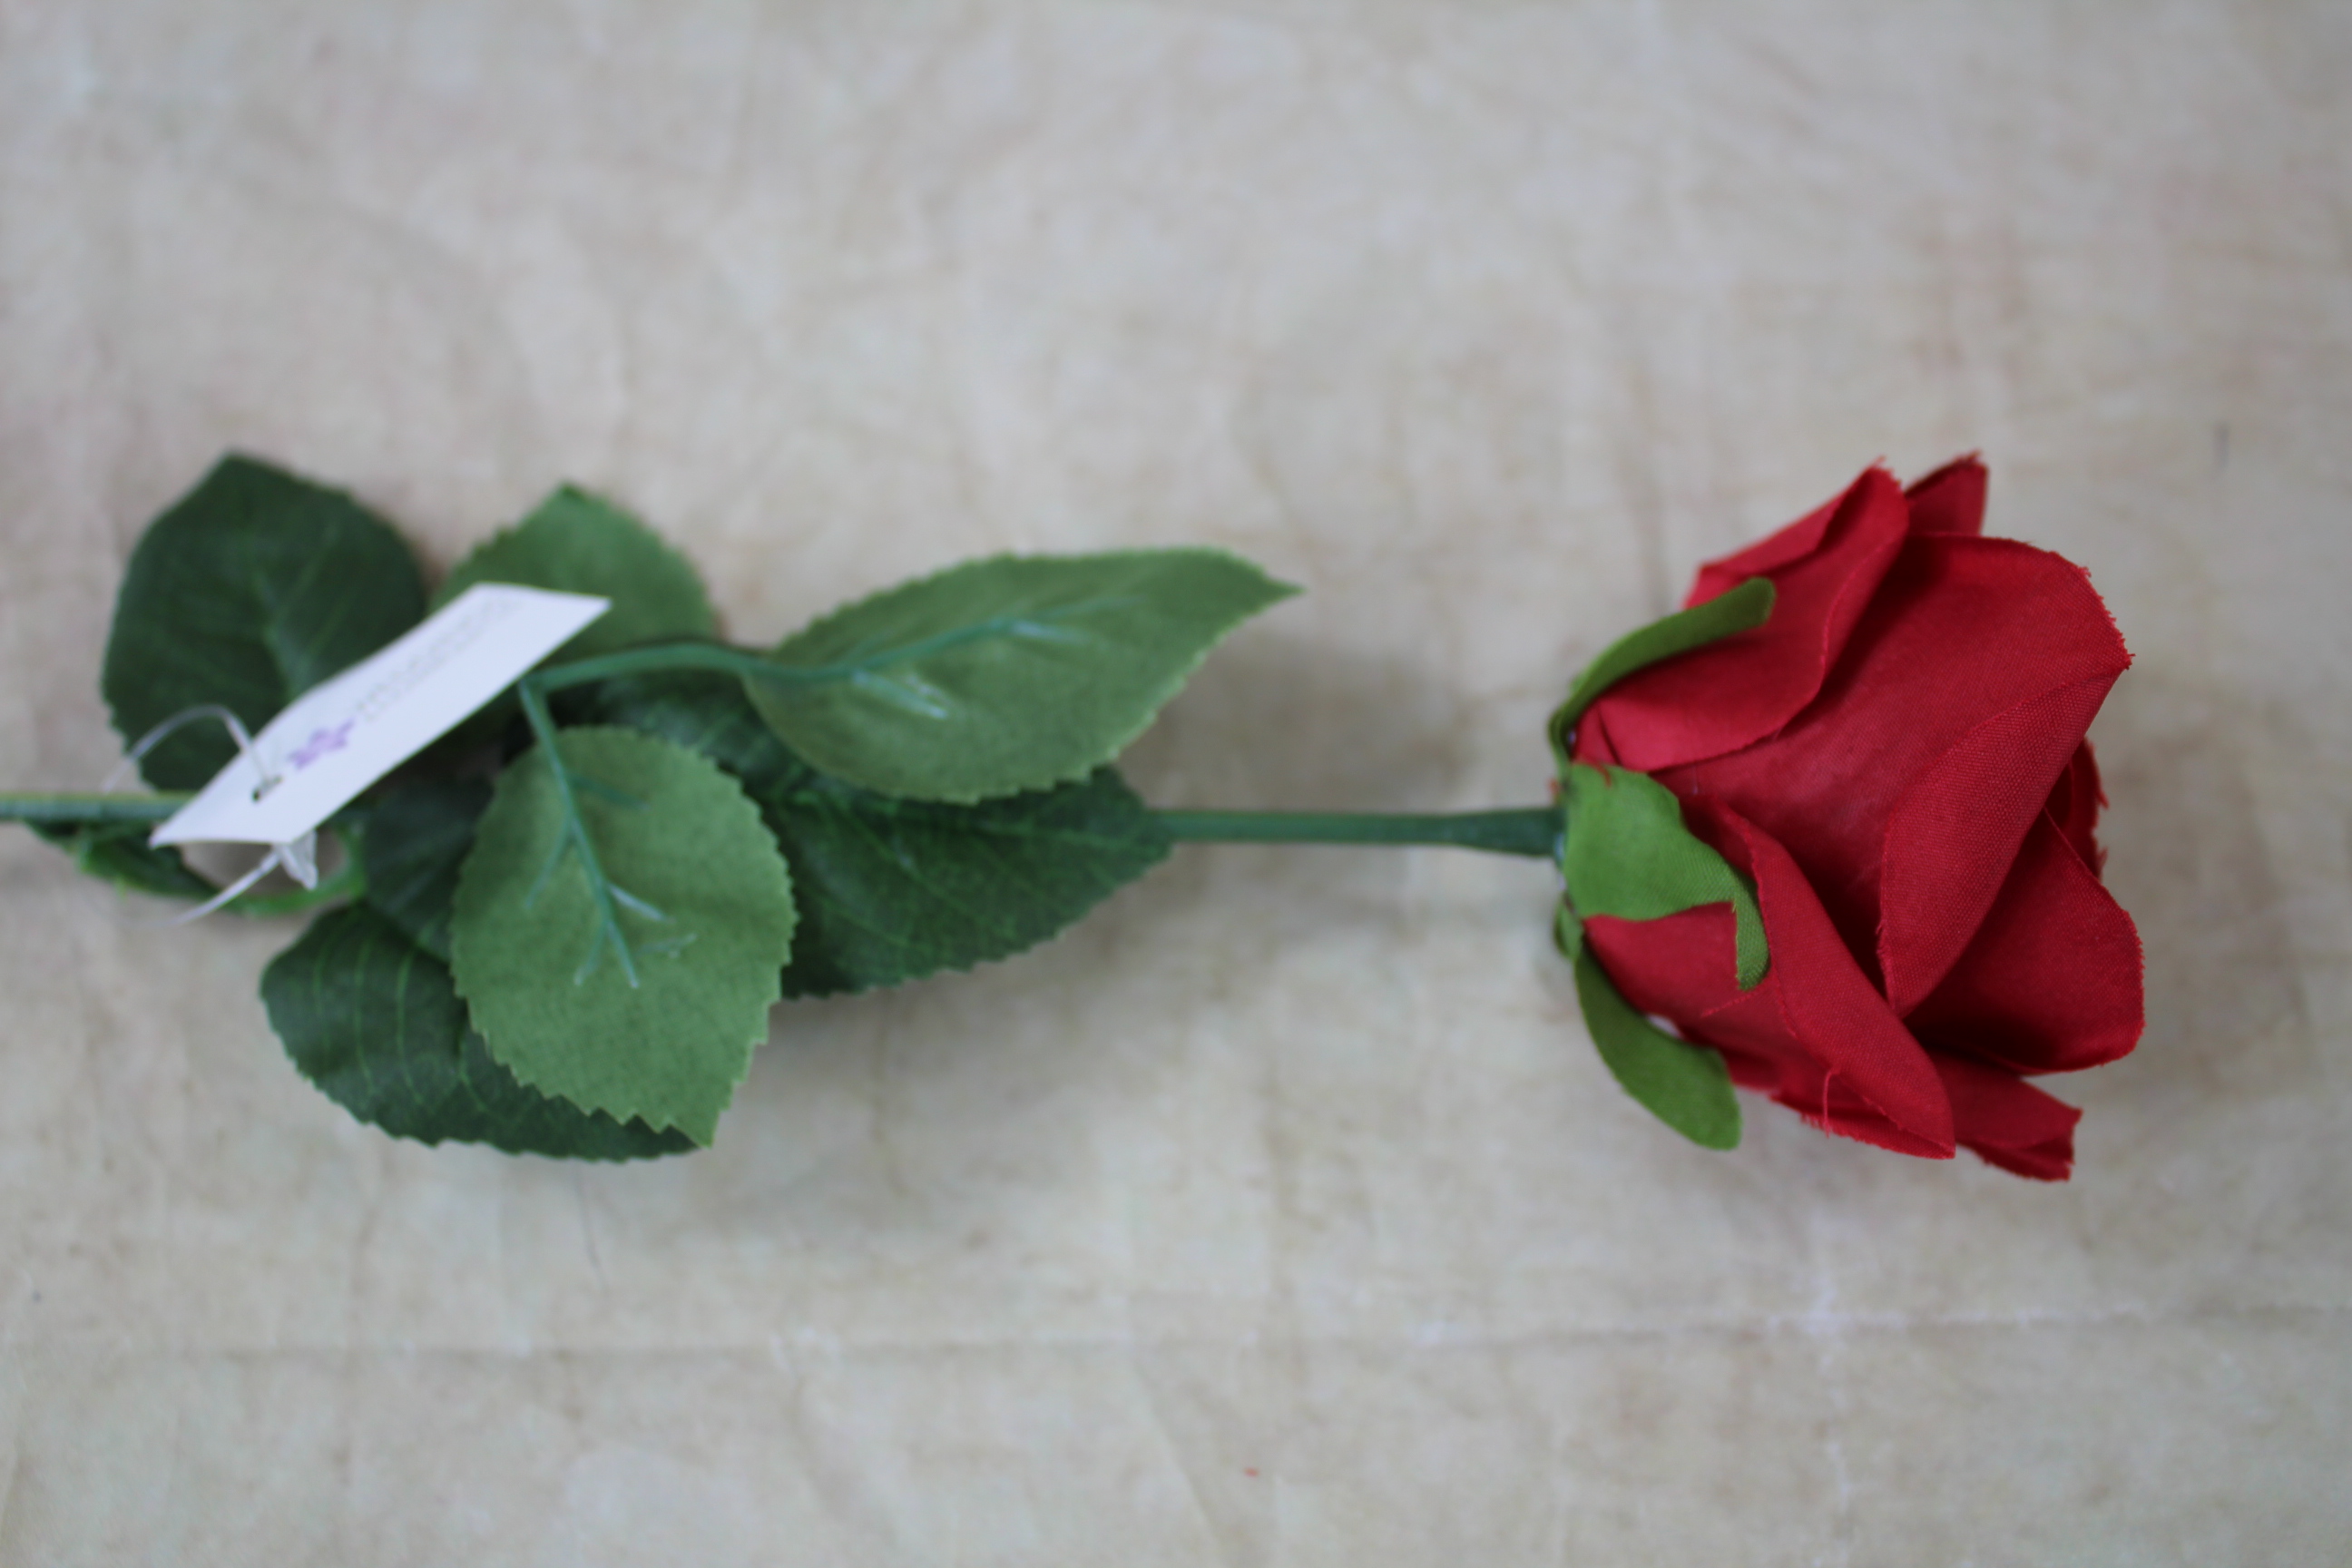 12 x 7cm single stem holland rose